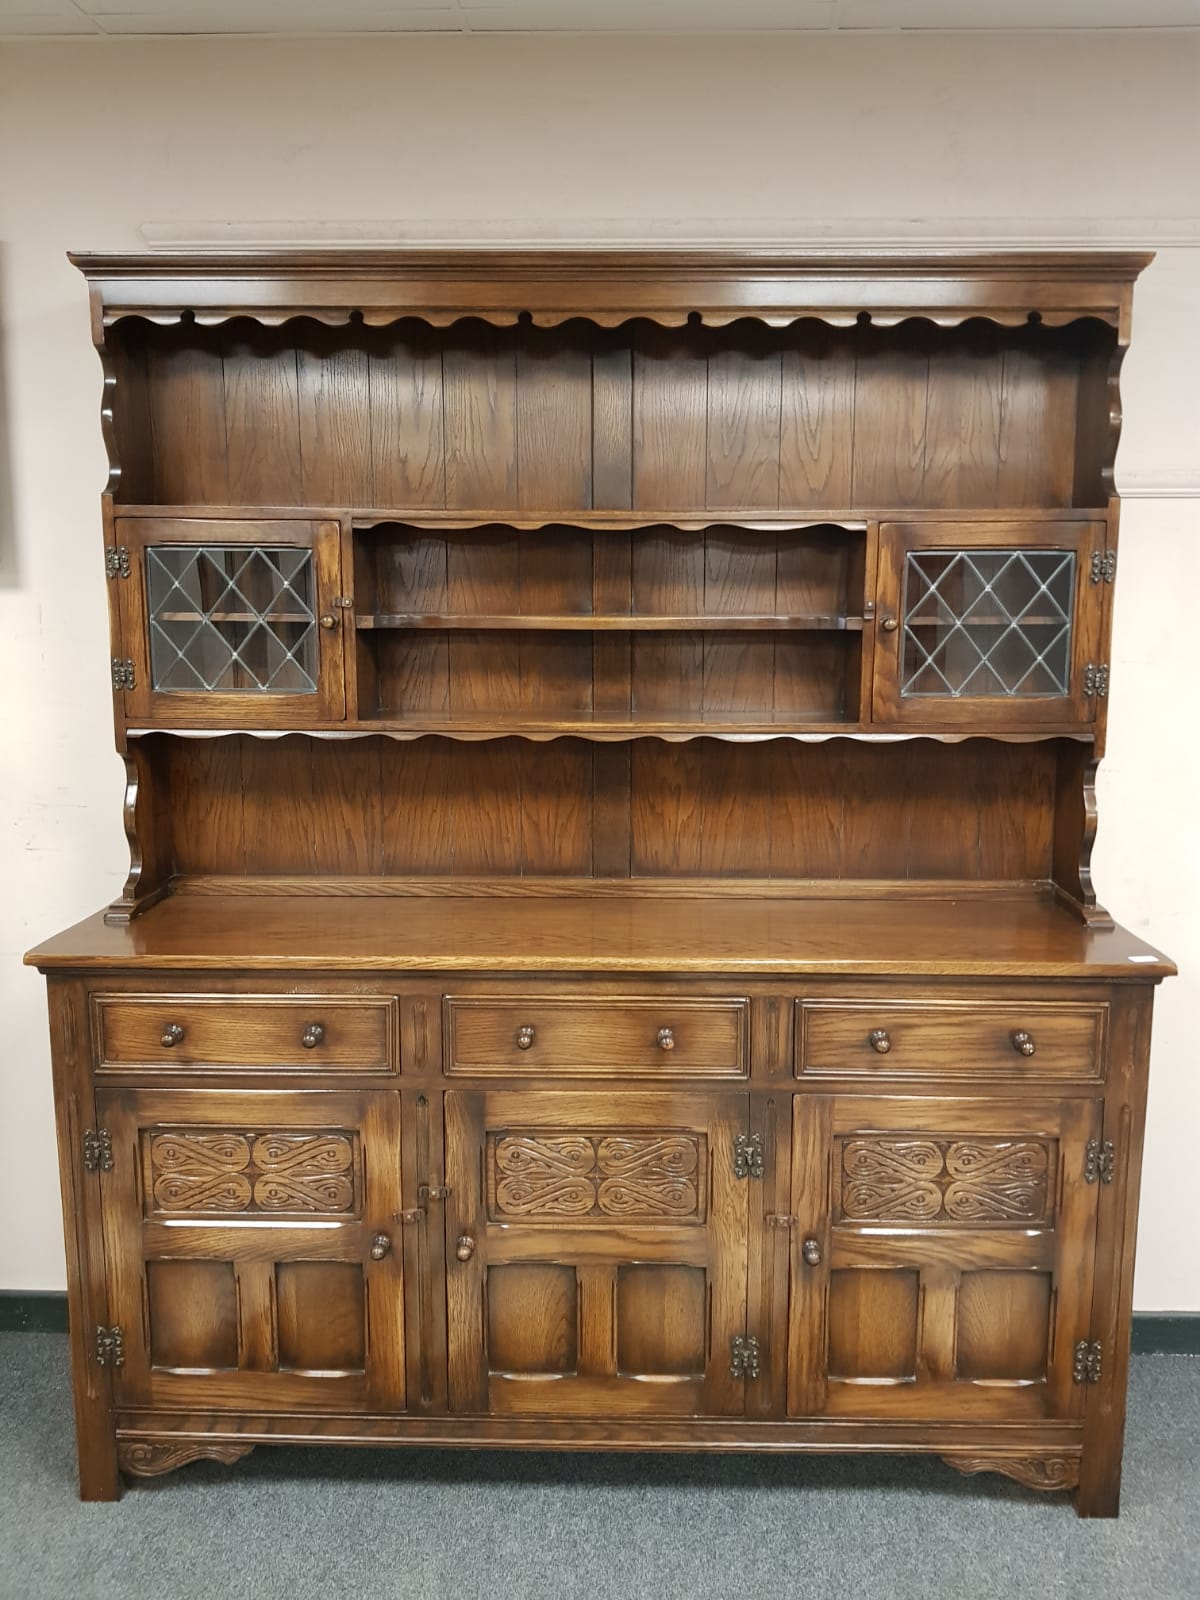 A Reprodux oak traditional style dresser,